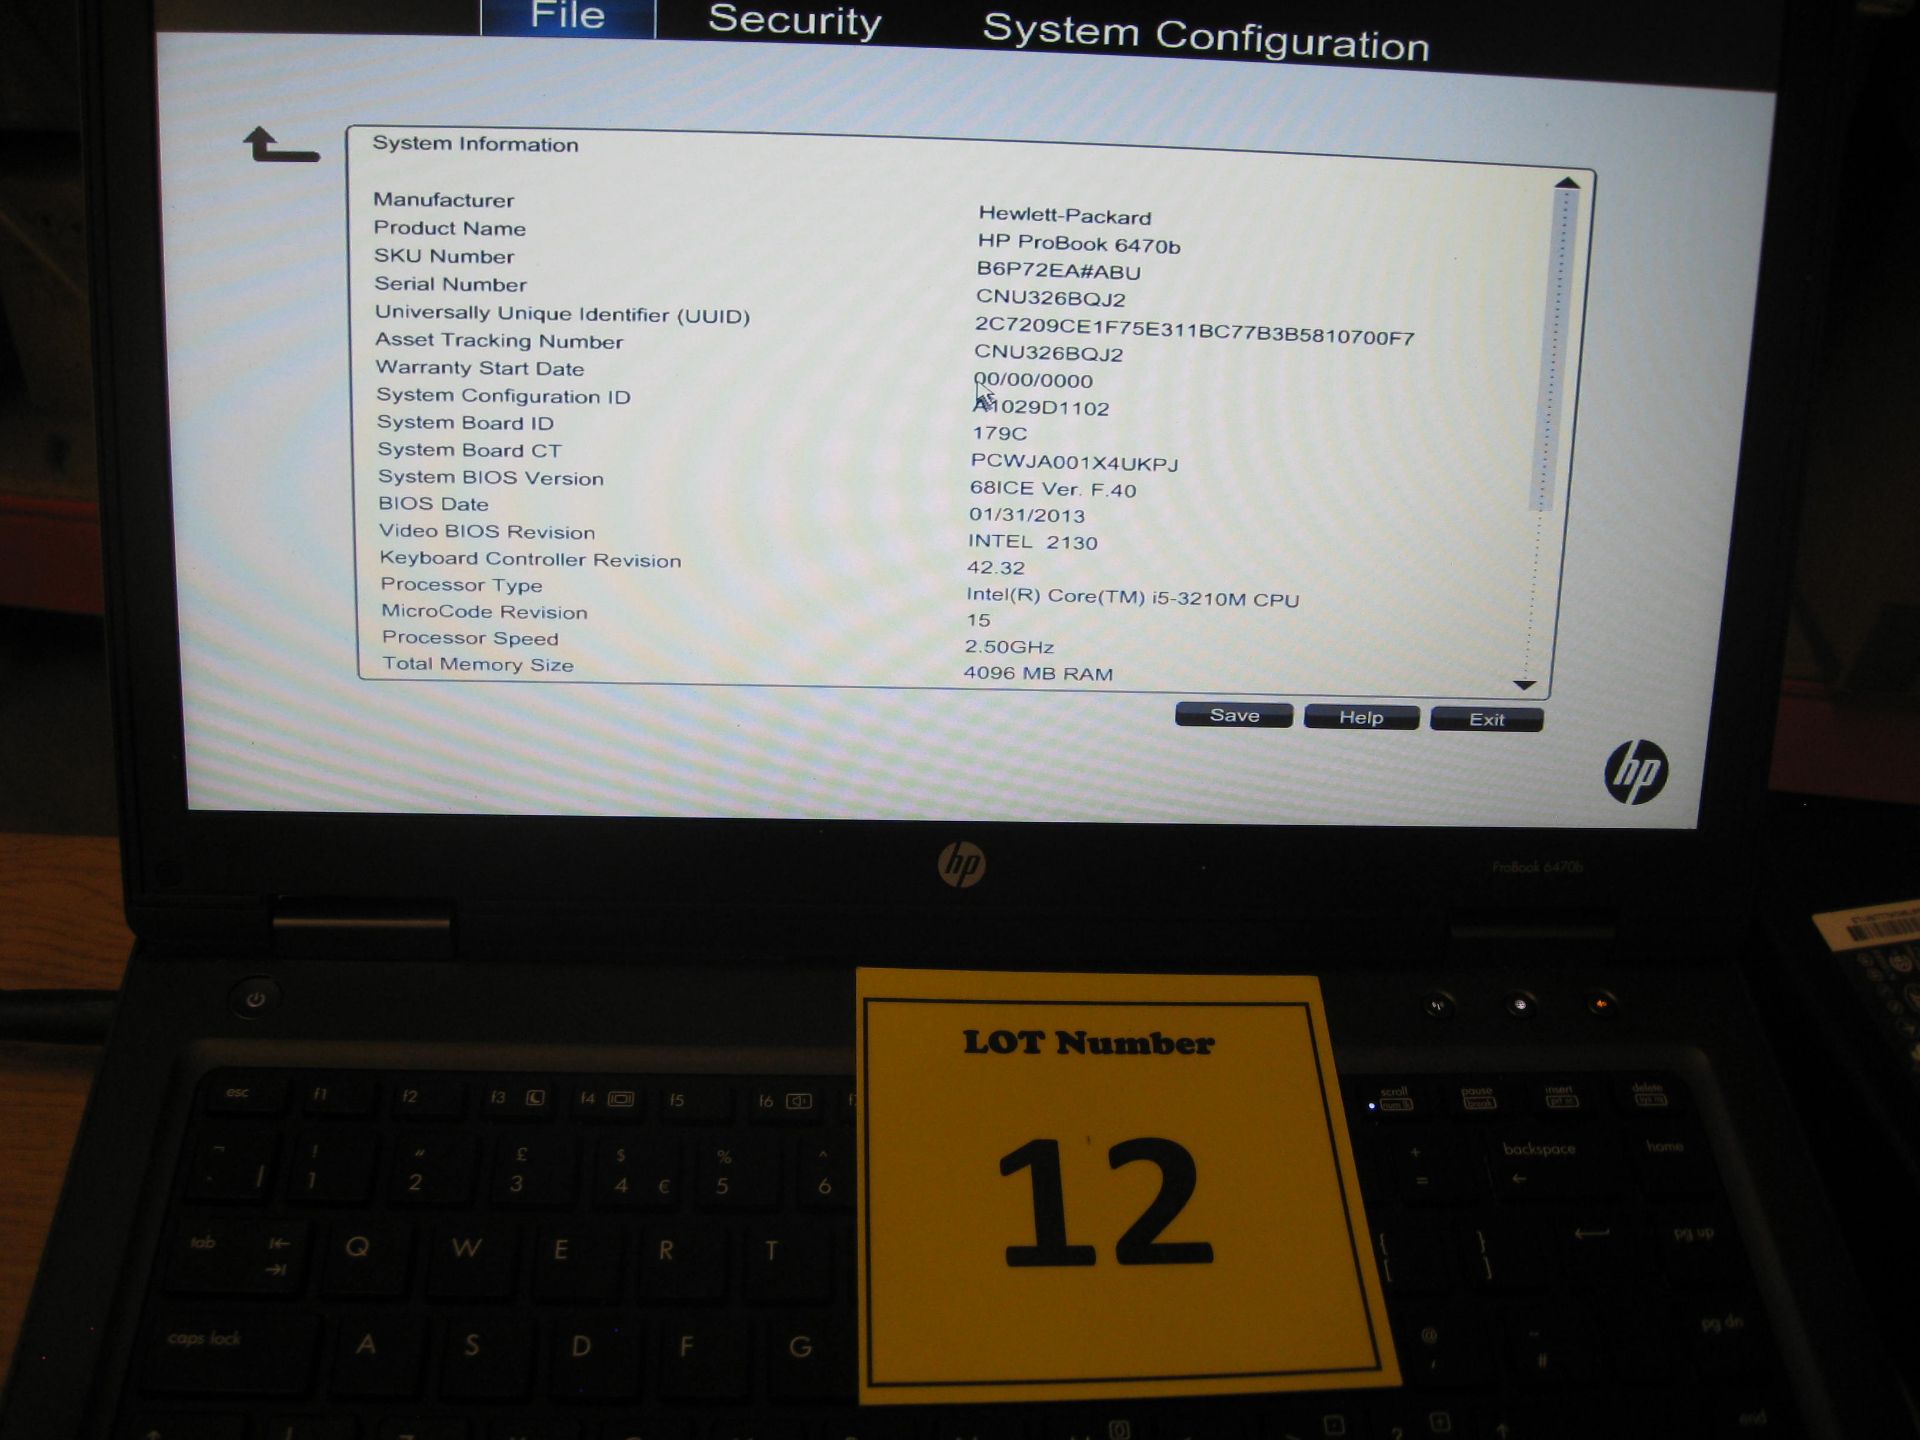 HP Probook 6470b Laptop, C-i5/2.50GHZ, 4GB RAM/320 GB HDD, dvdrw, psu - Win 7 Pro COA - Image 2 of 4